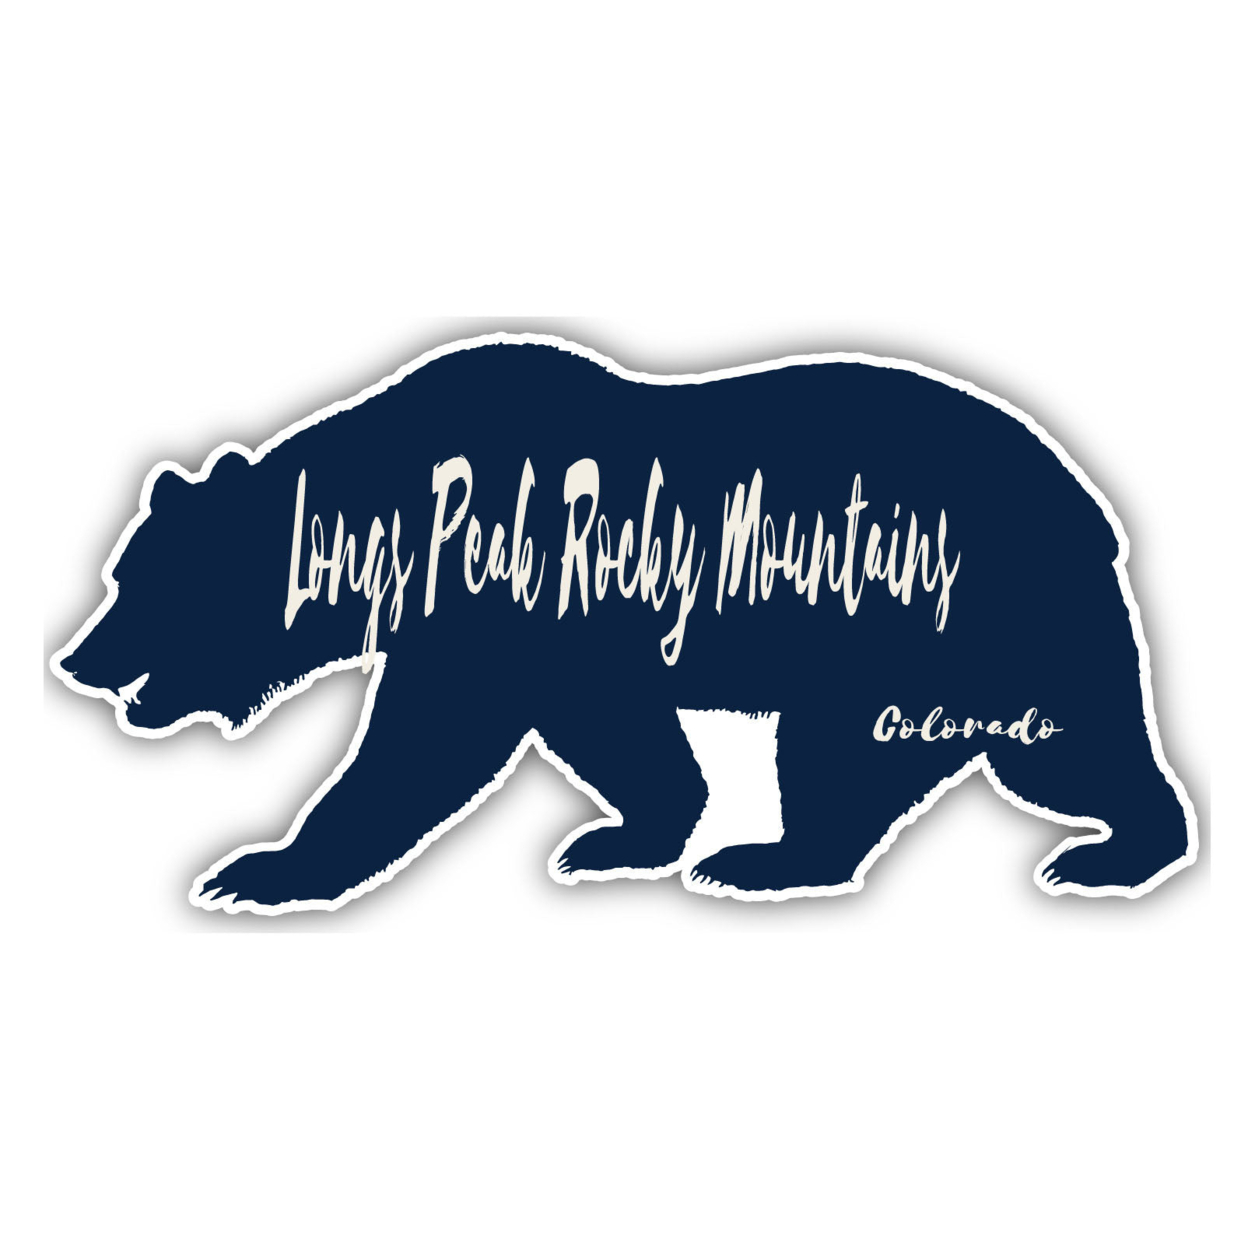 Longs Peak Rocky Mountains Colorado Souvenir Decorative Stickers (Choose Theme And Size) - 4-Inch, Bear